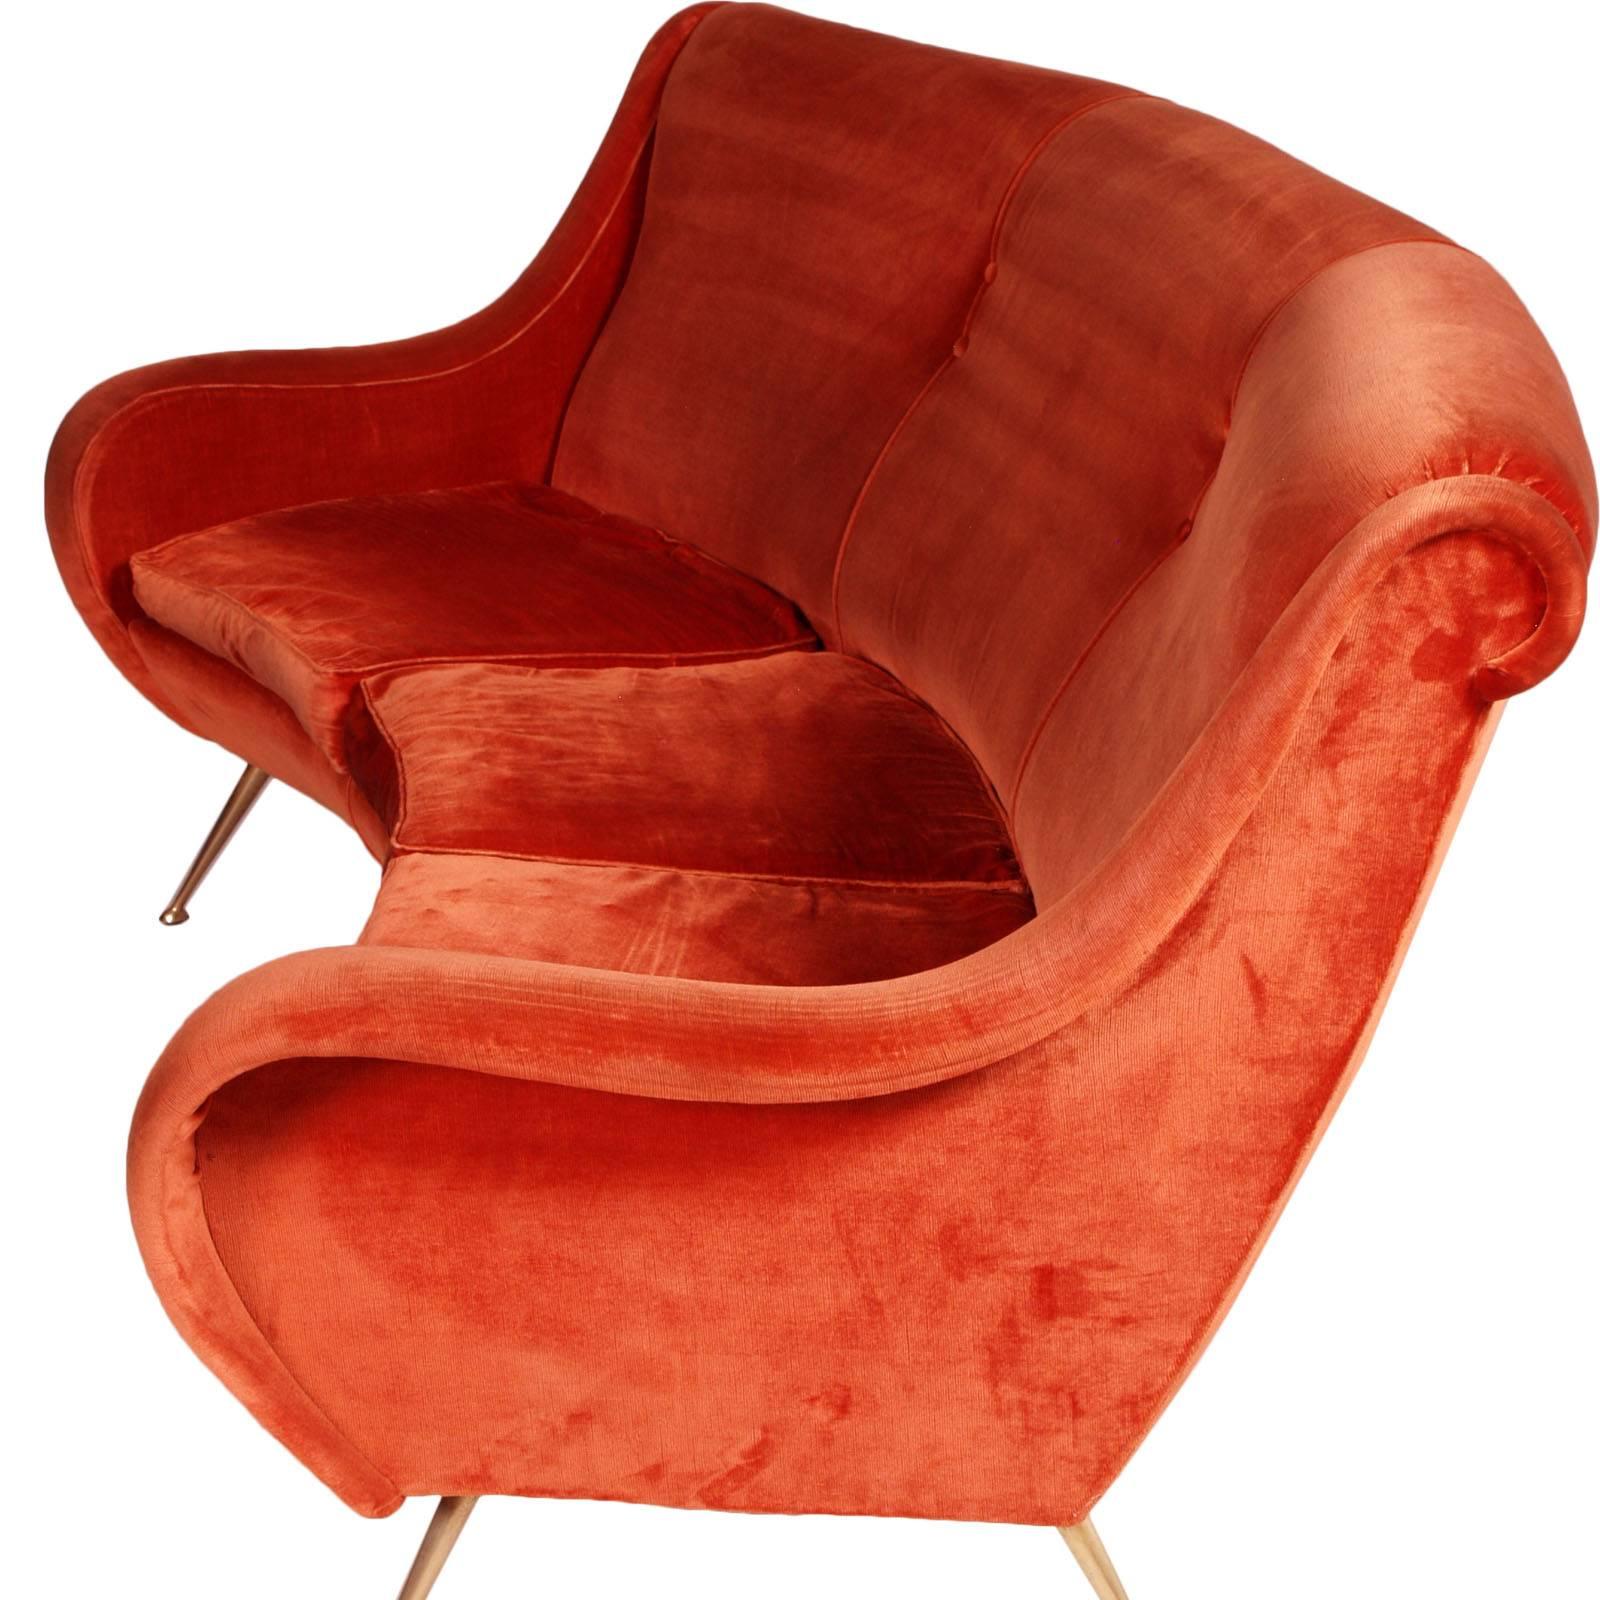 Mid-Century Modern Three-Seat Curved Sofa Marco Zanuso design, Brass Legs Original Red Coral Velvet